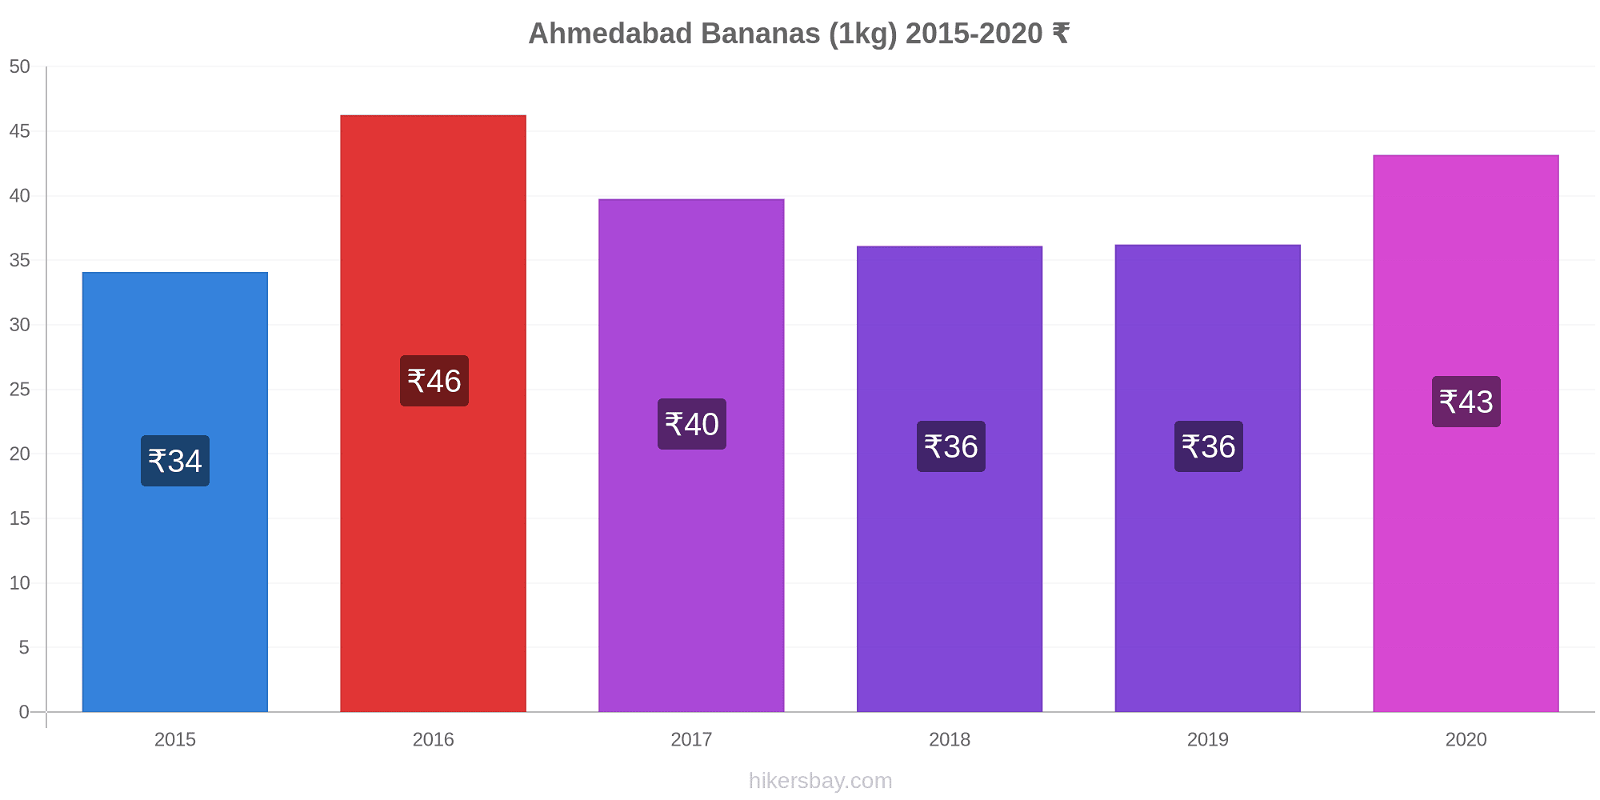 Ahmedabad price changes Bananas (1kg) hikersbay.com